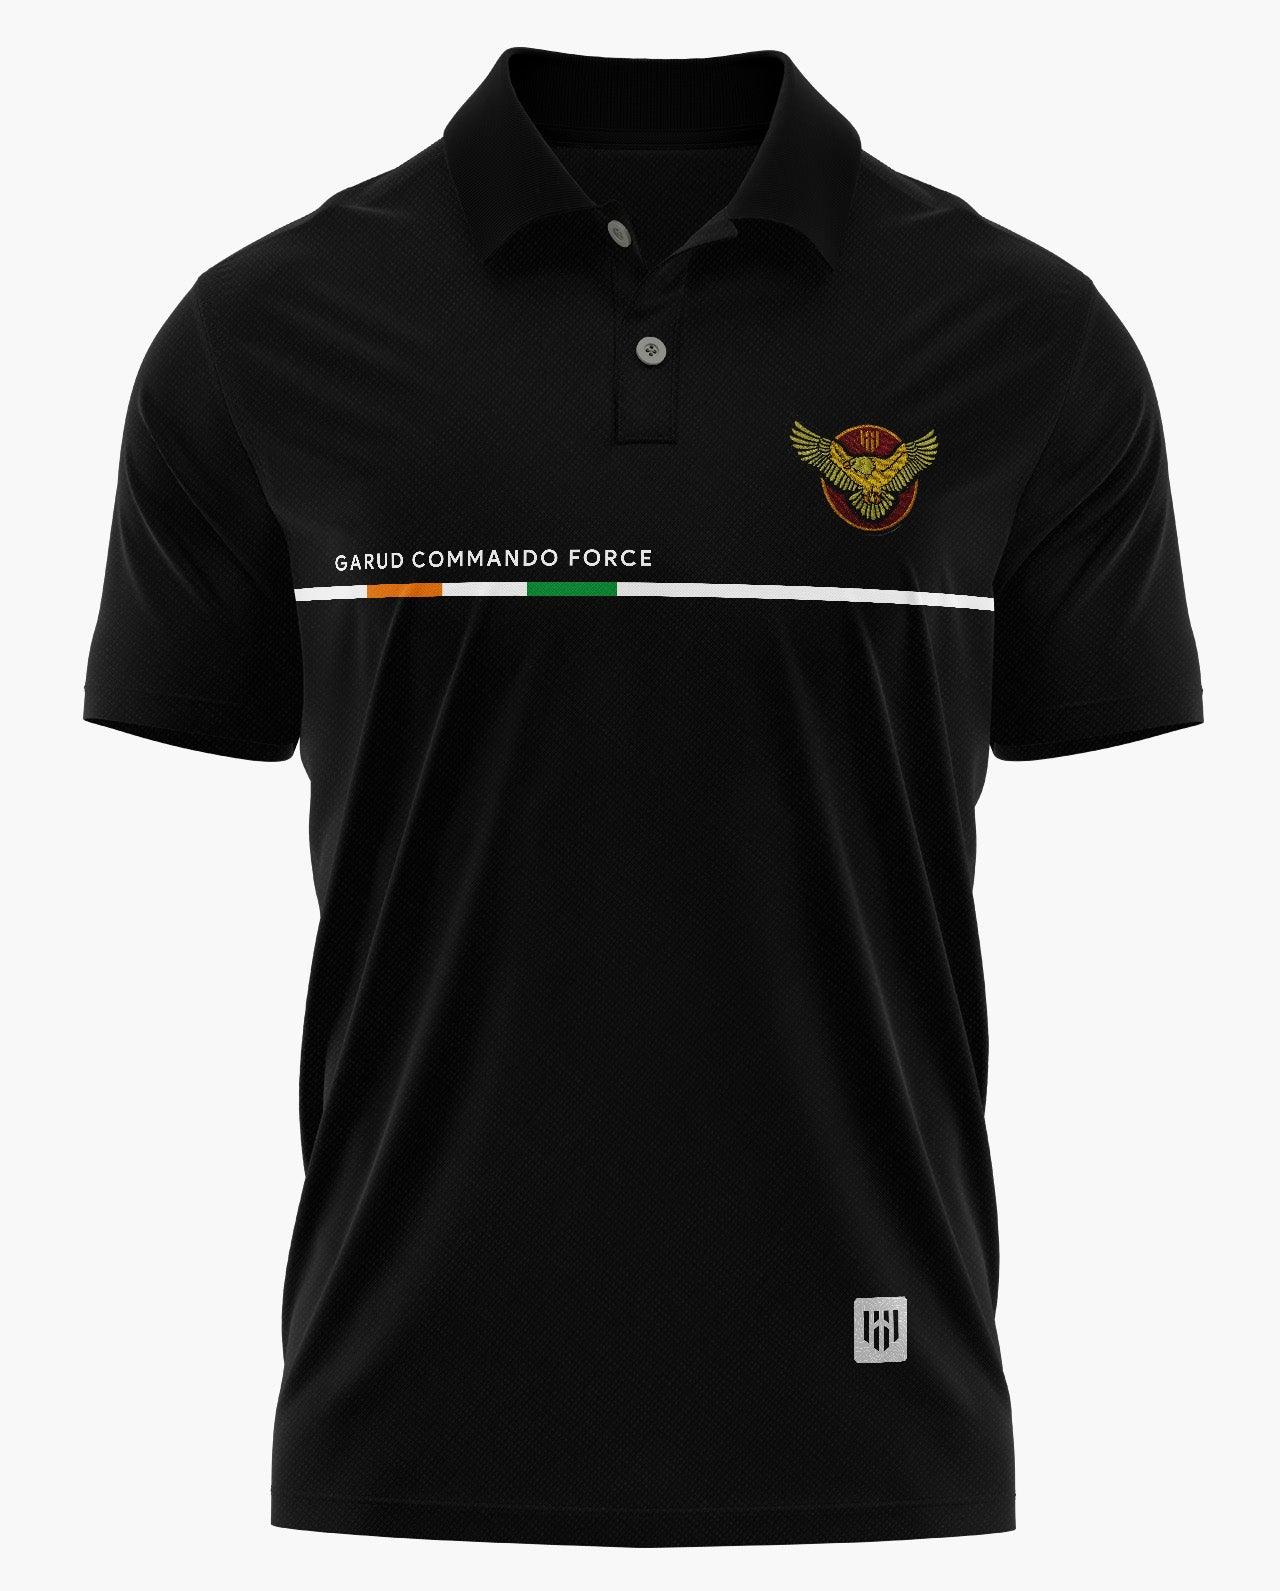 Garud commando force Polo T-Shirt - Aero Armour